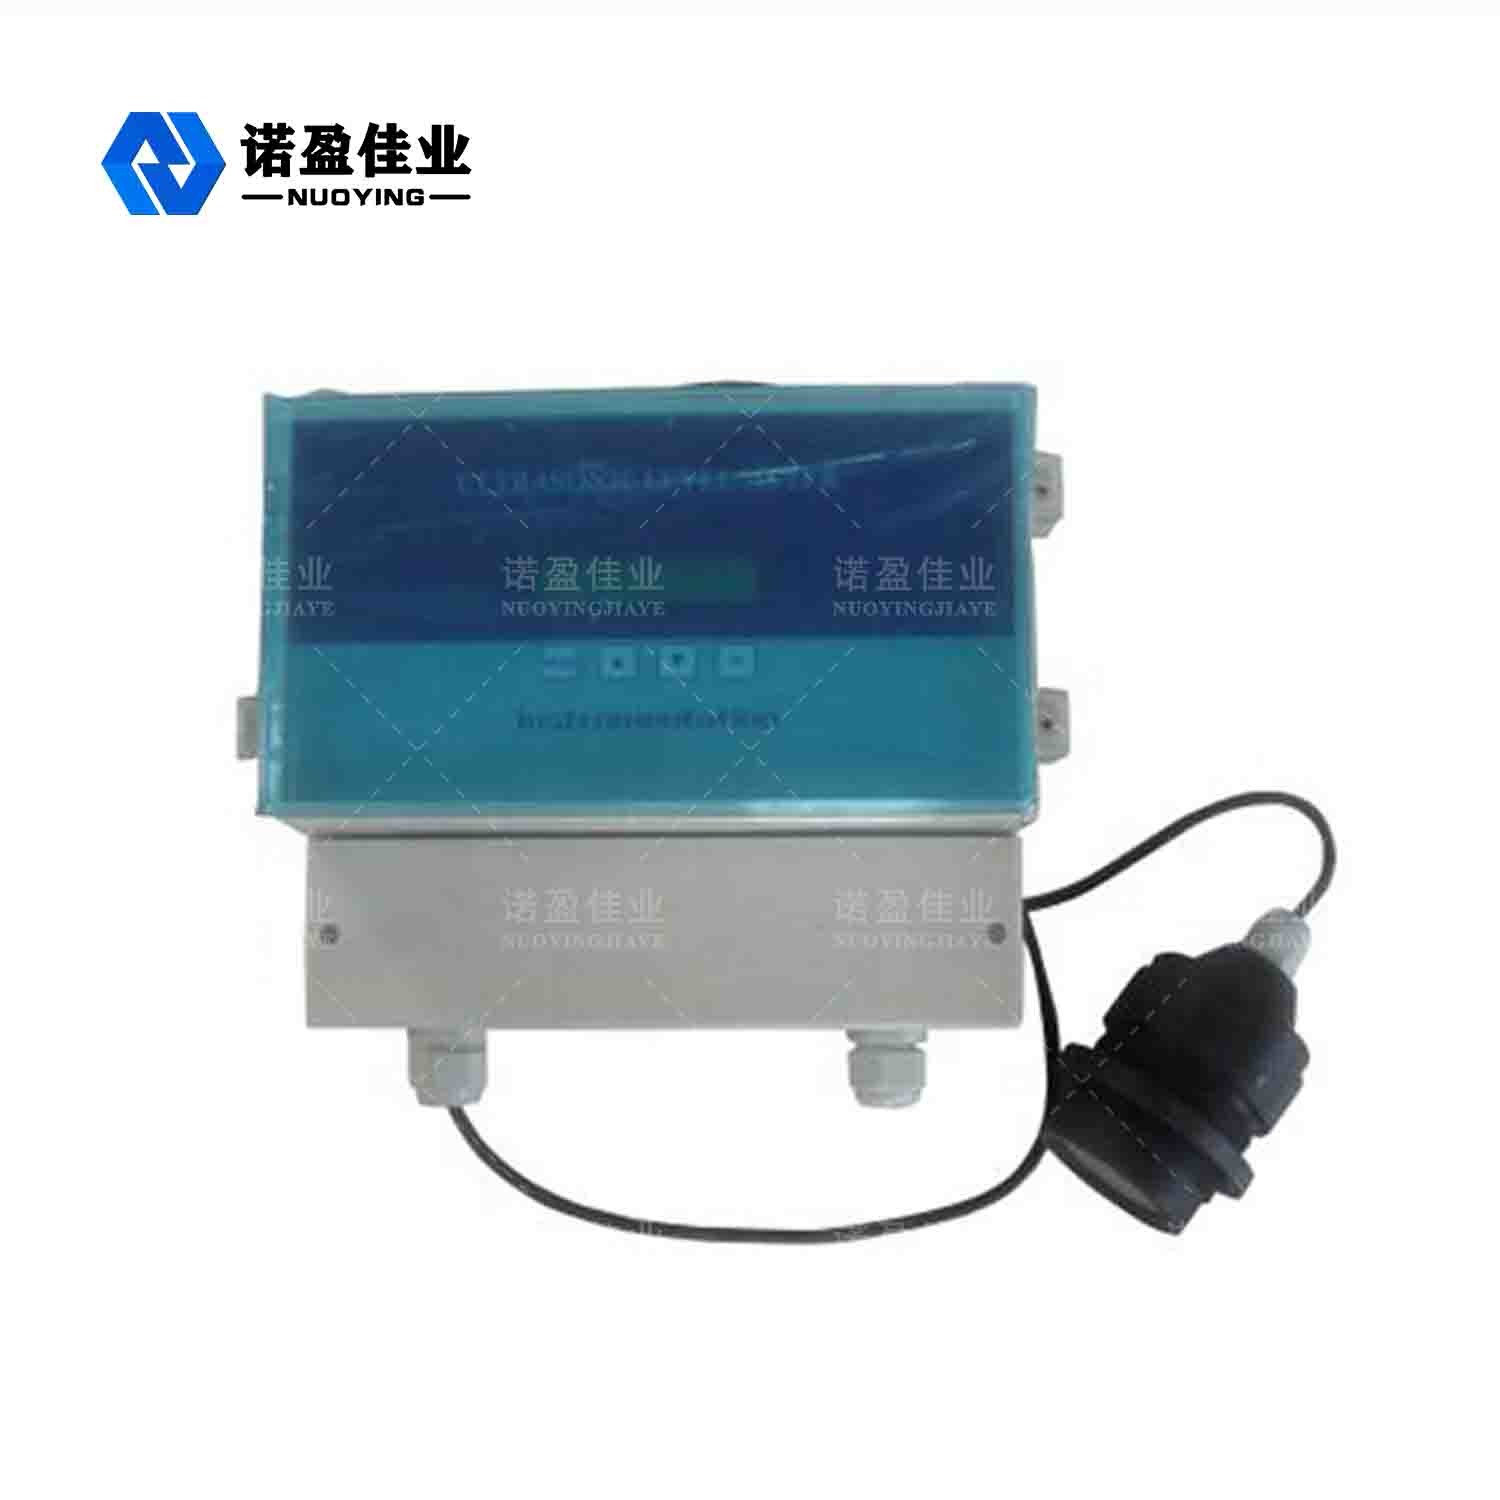 China 1mm Split Ultrasonic Open Channel Flow Meter LCD Display factory